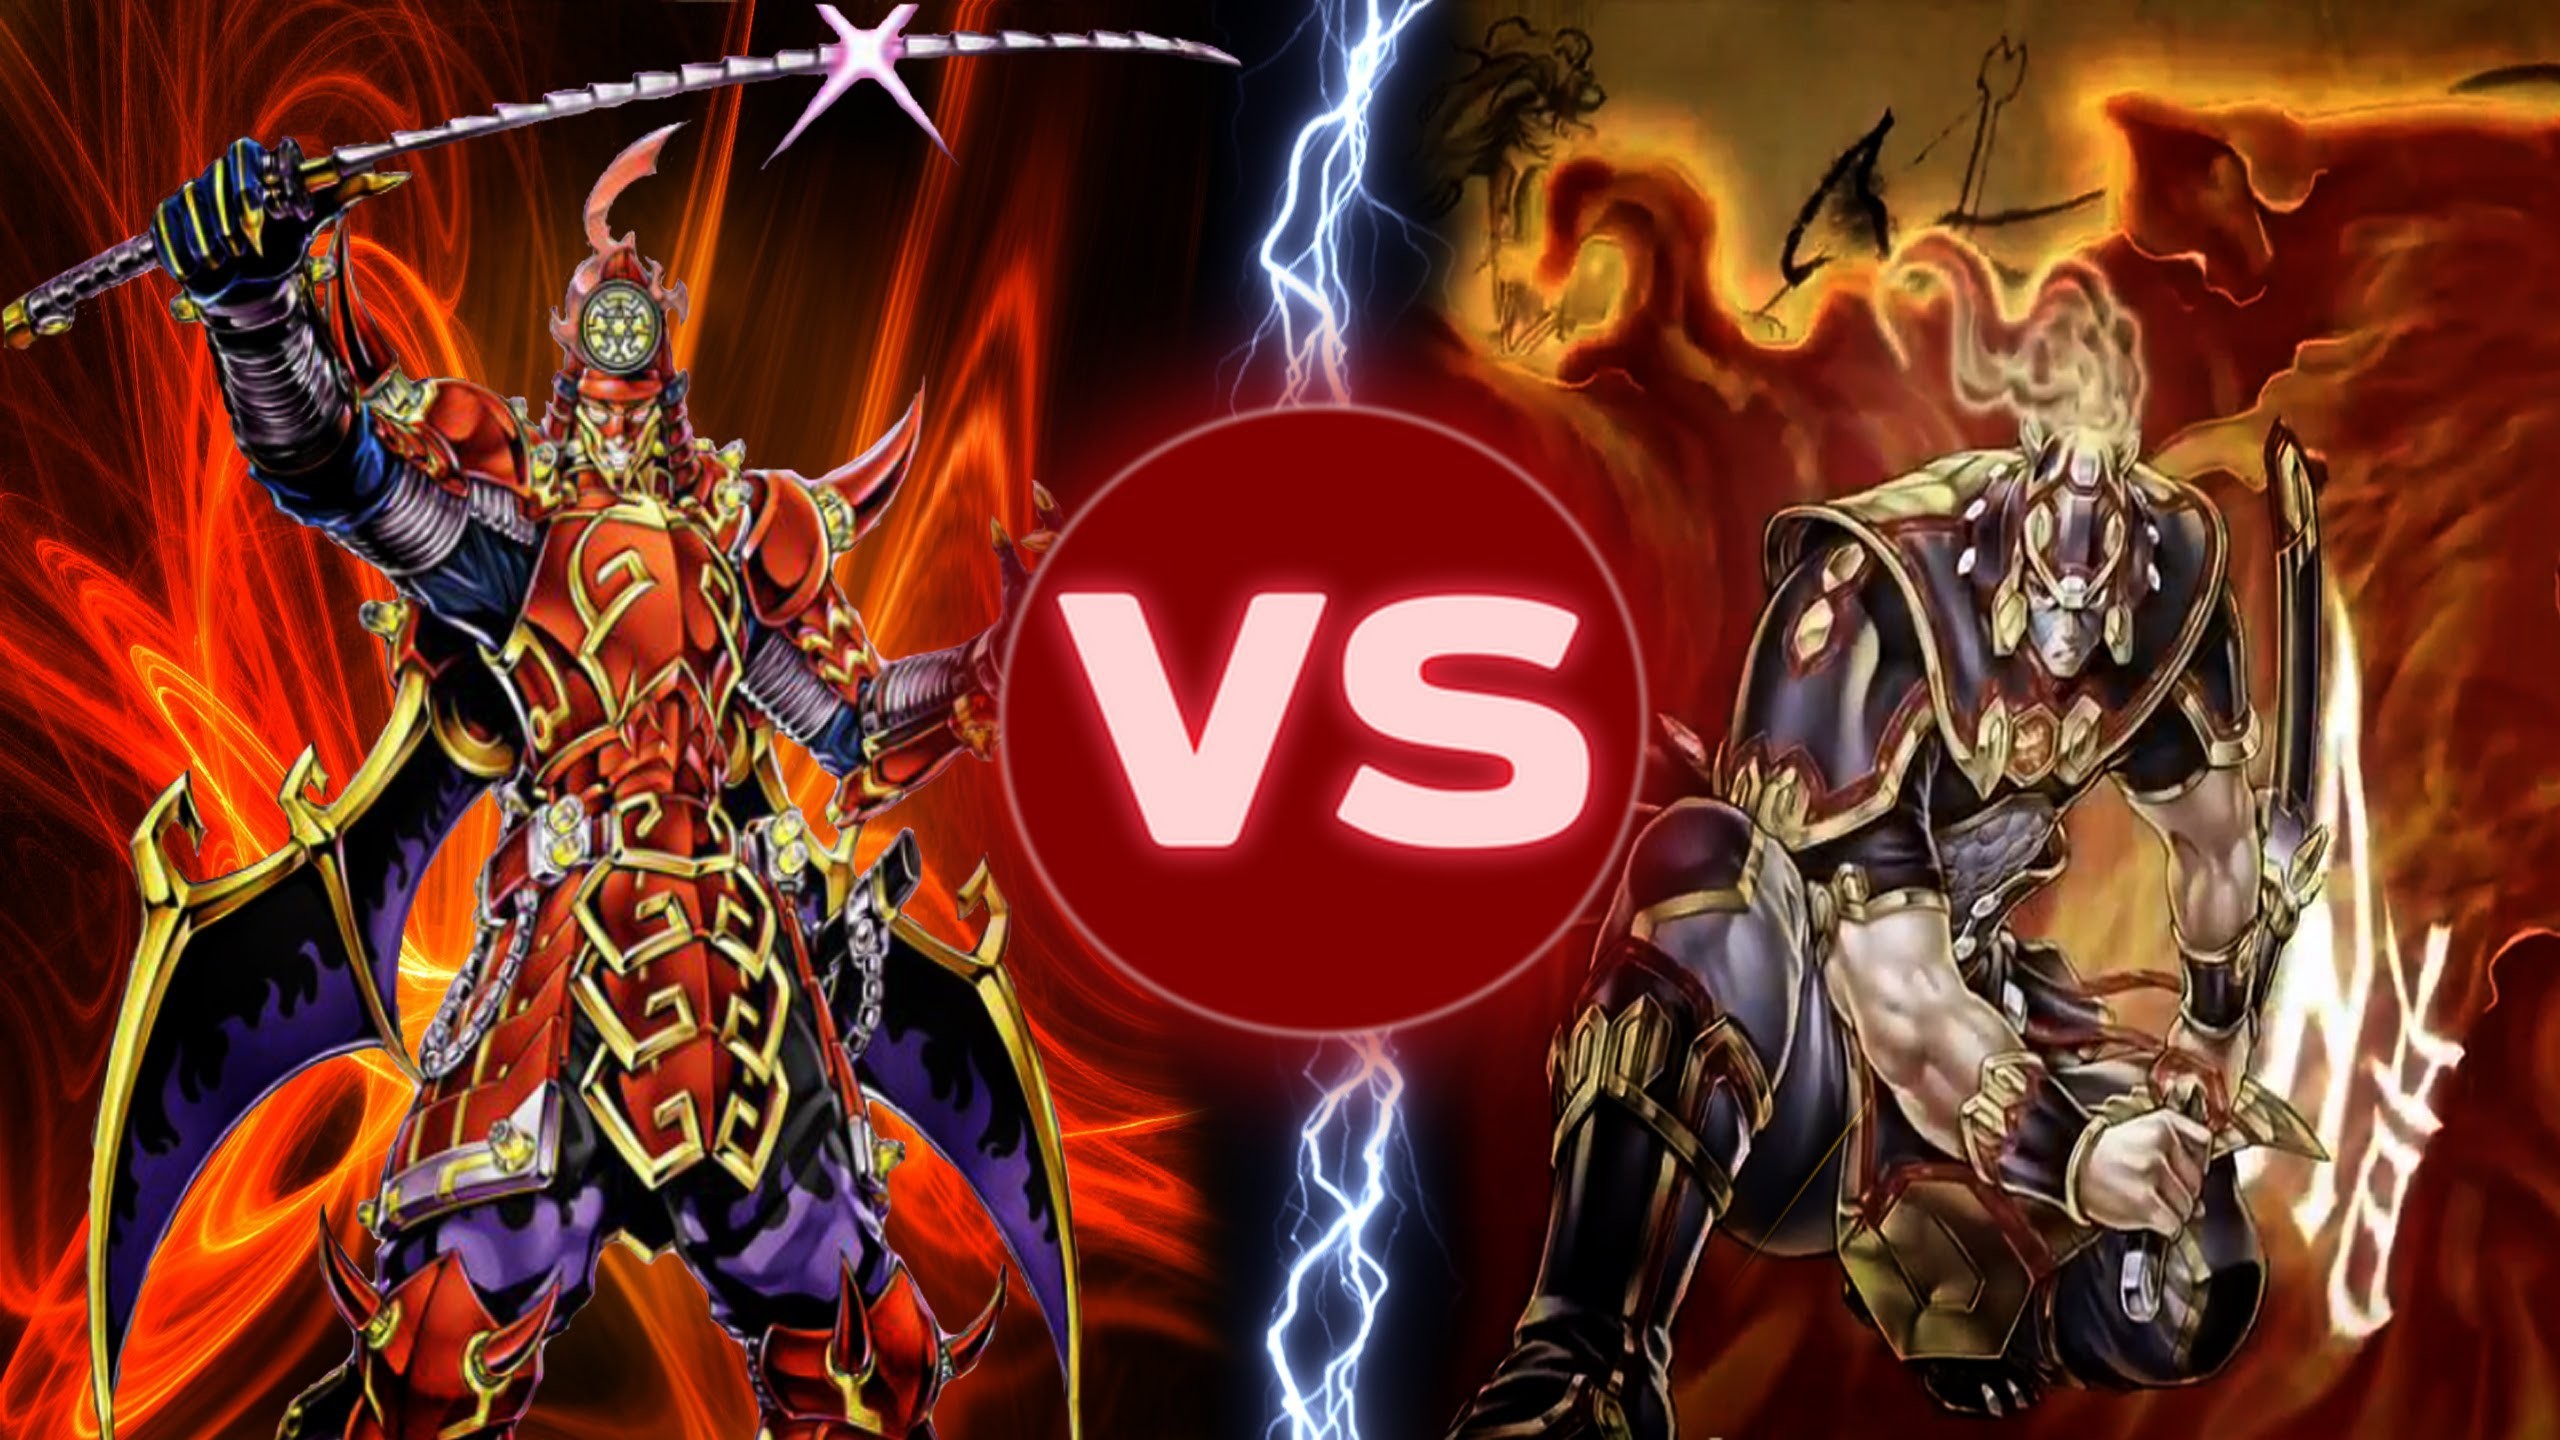 Yugioh Duel – Six Samurais Vs Fire Fist 2013 Dueling Network – YouTube